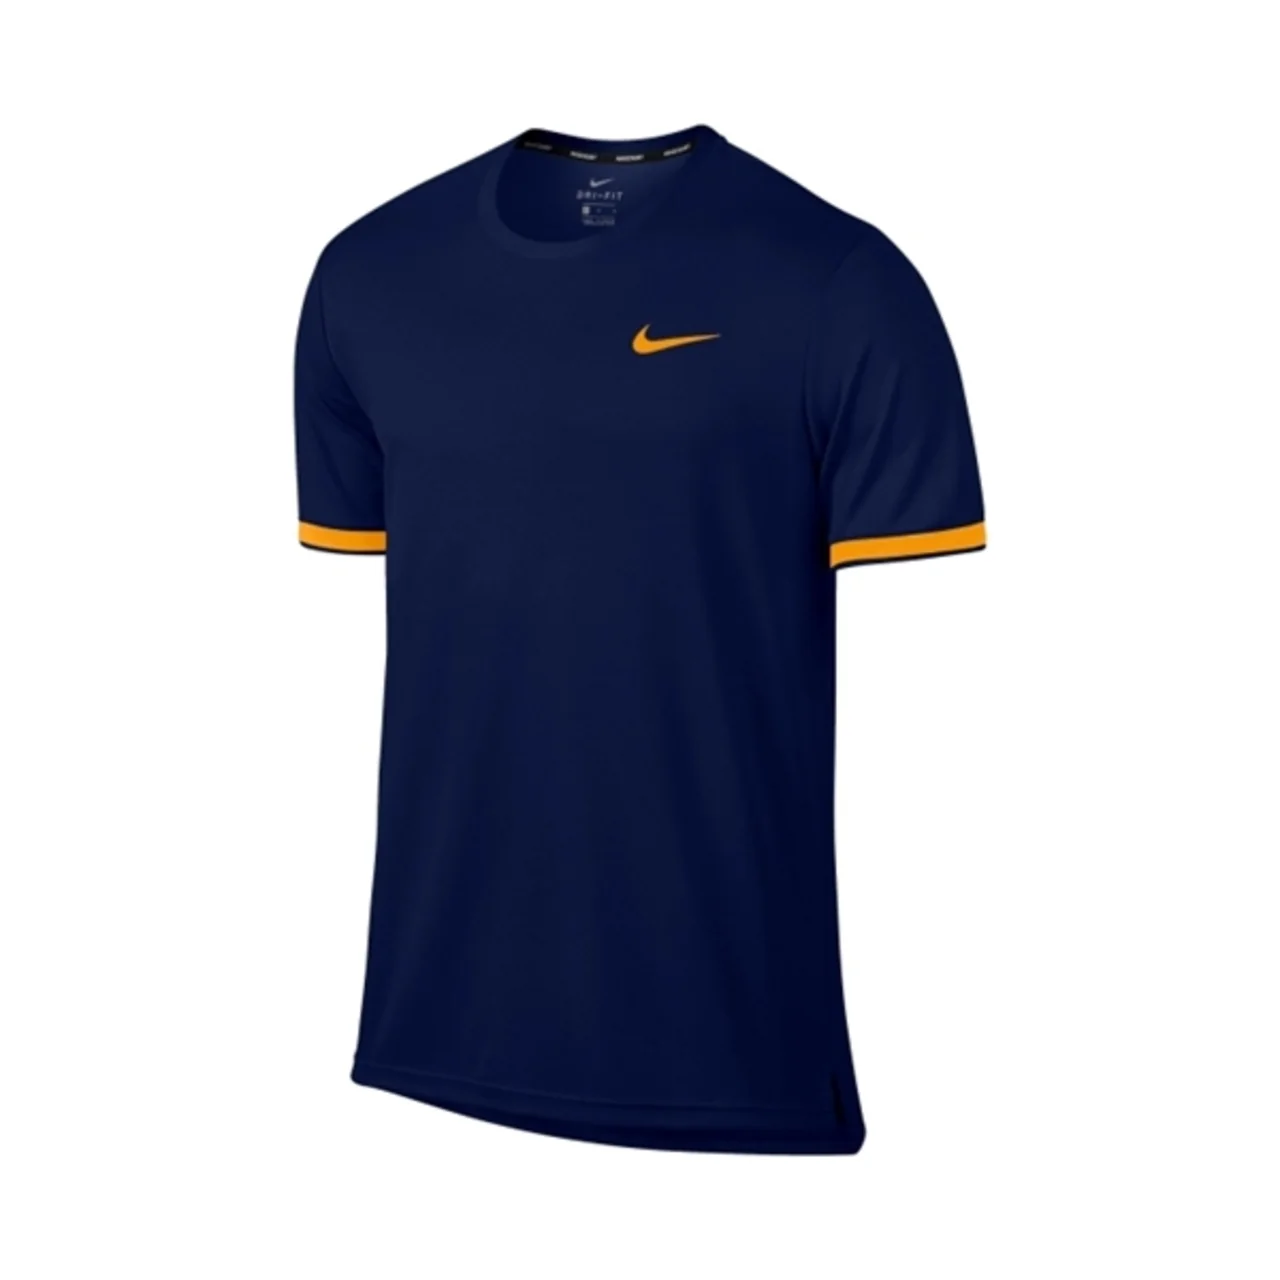 Nike Dry Top Team Navy/Orange Size S